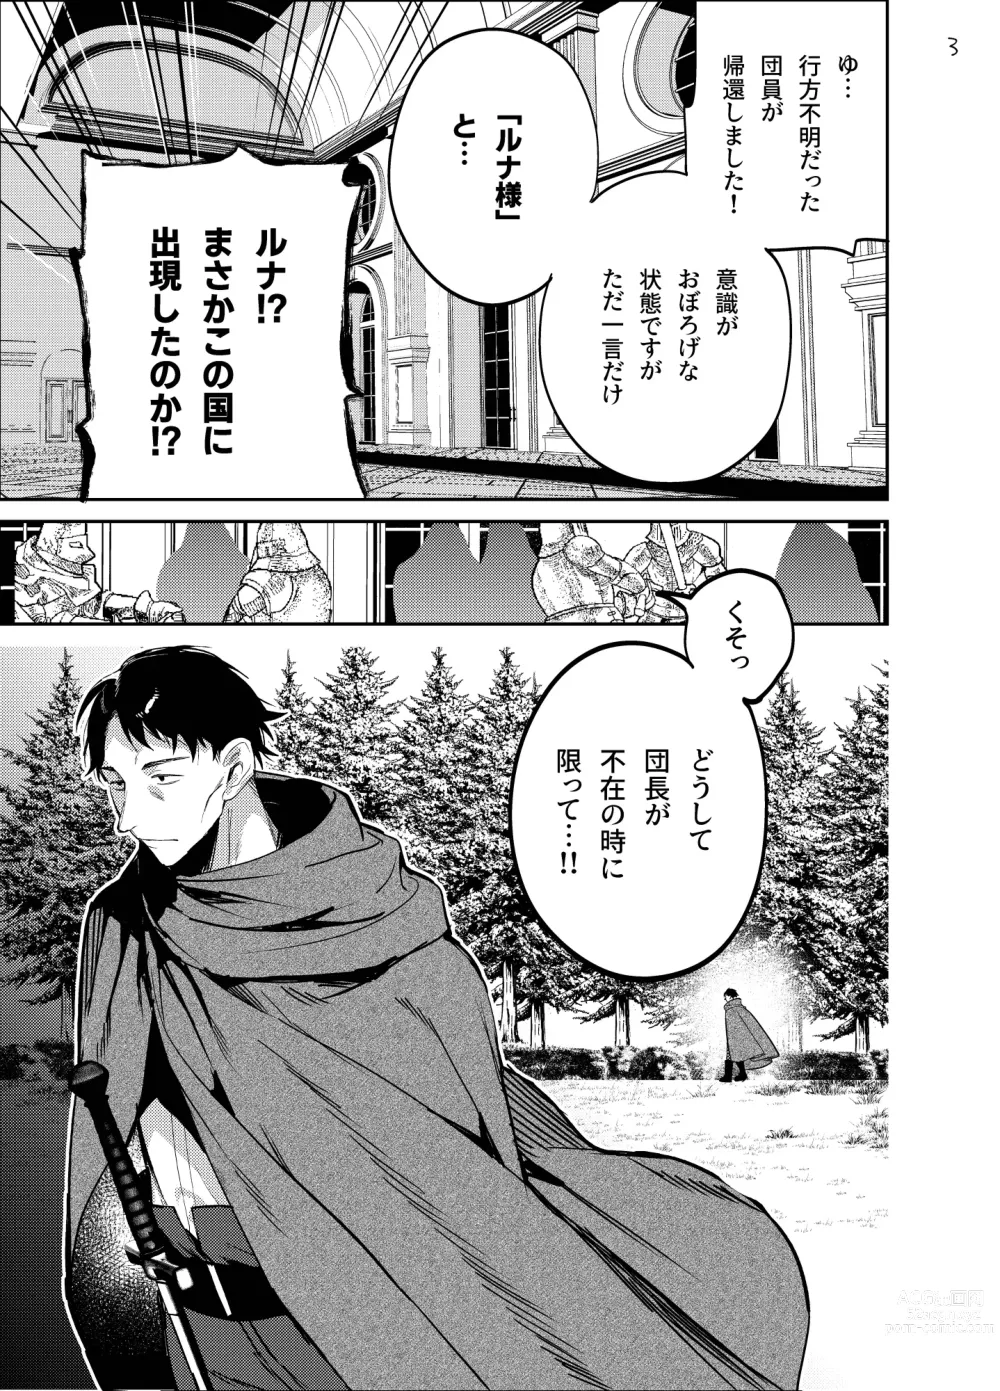 Page 3 of doujinshi Nightmare Before Christmas